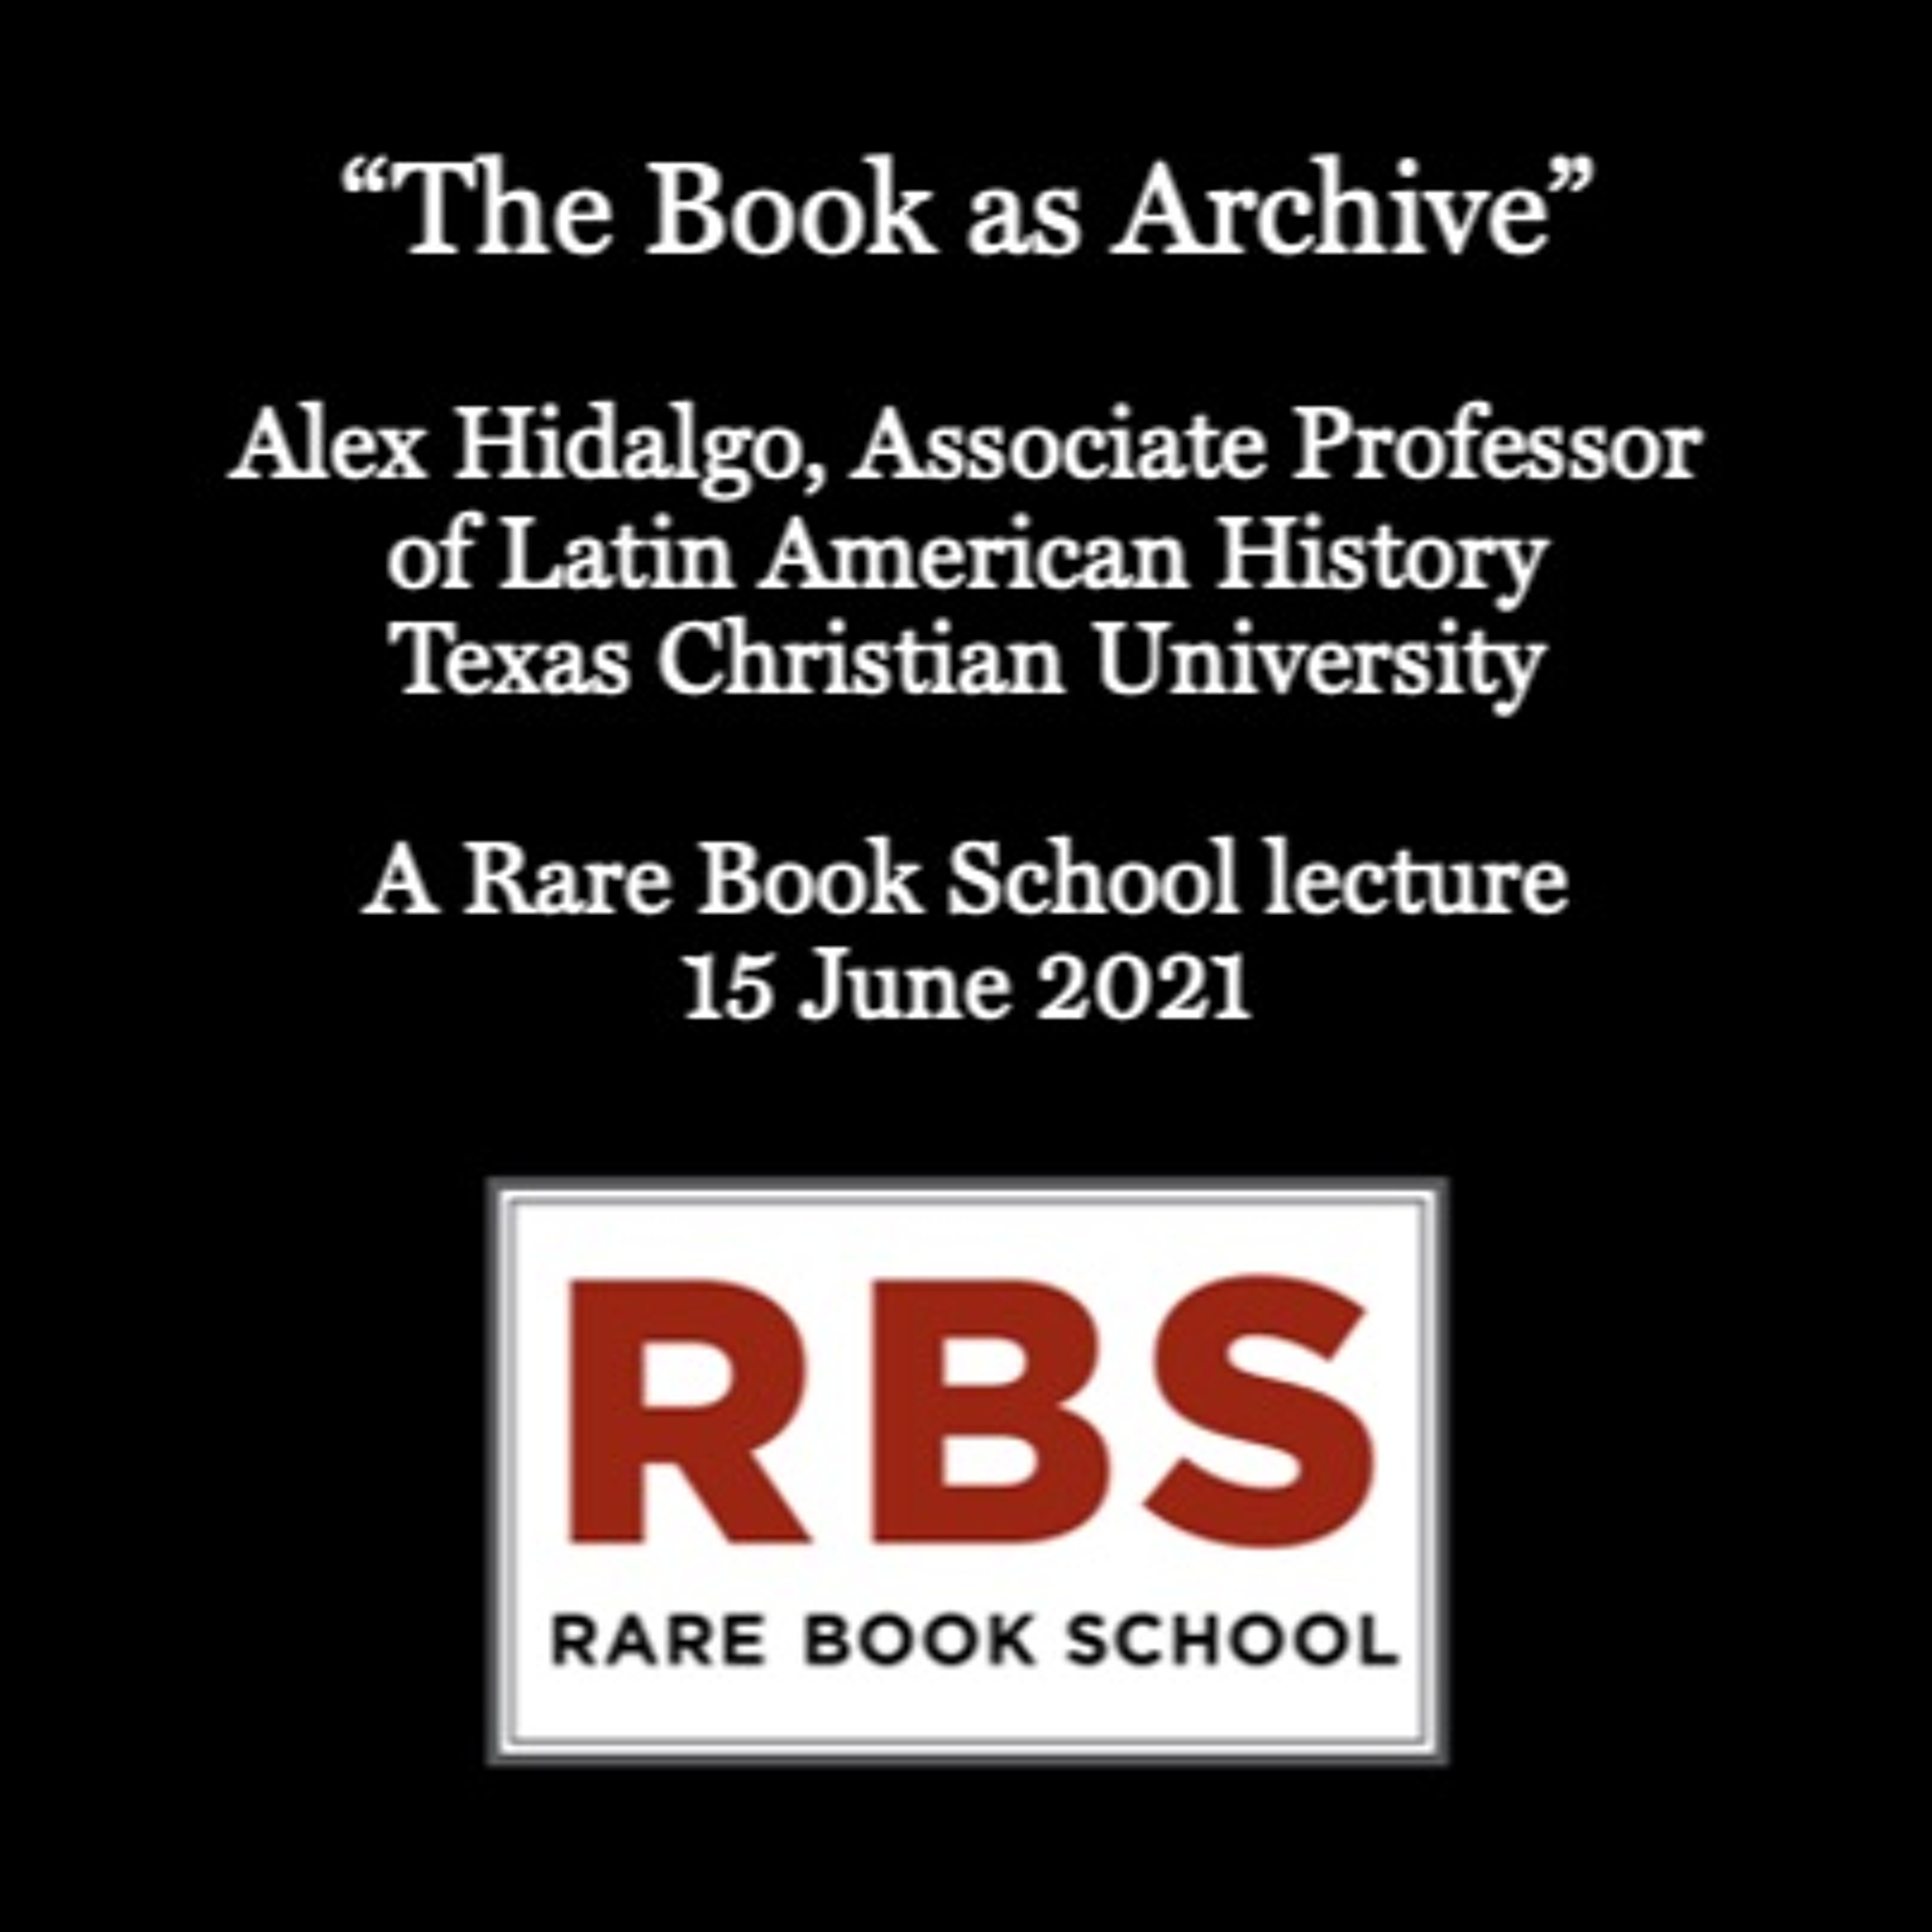 Hidalgo, Alex - ”The Book as Archive” - 15 June 2021